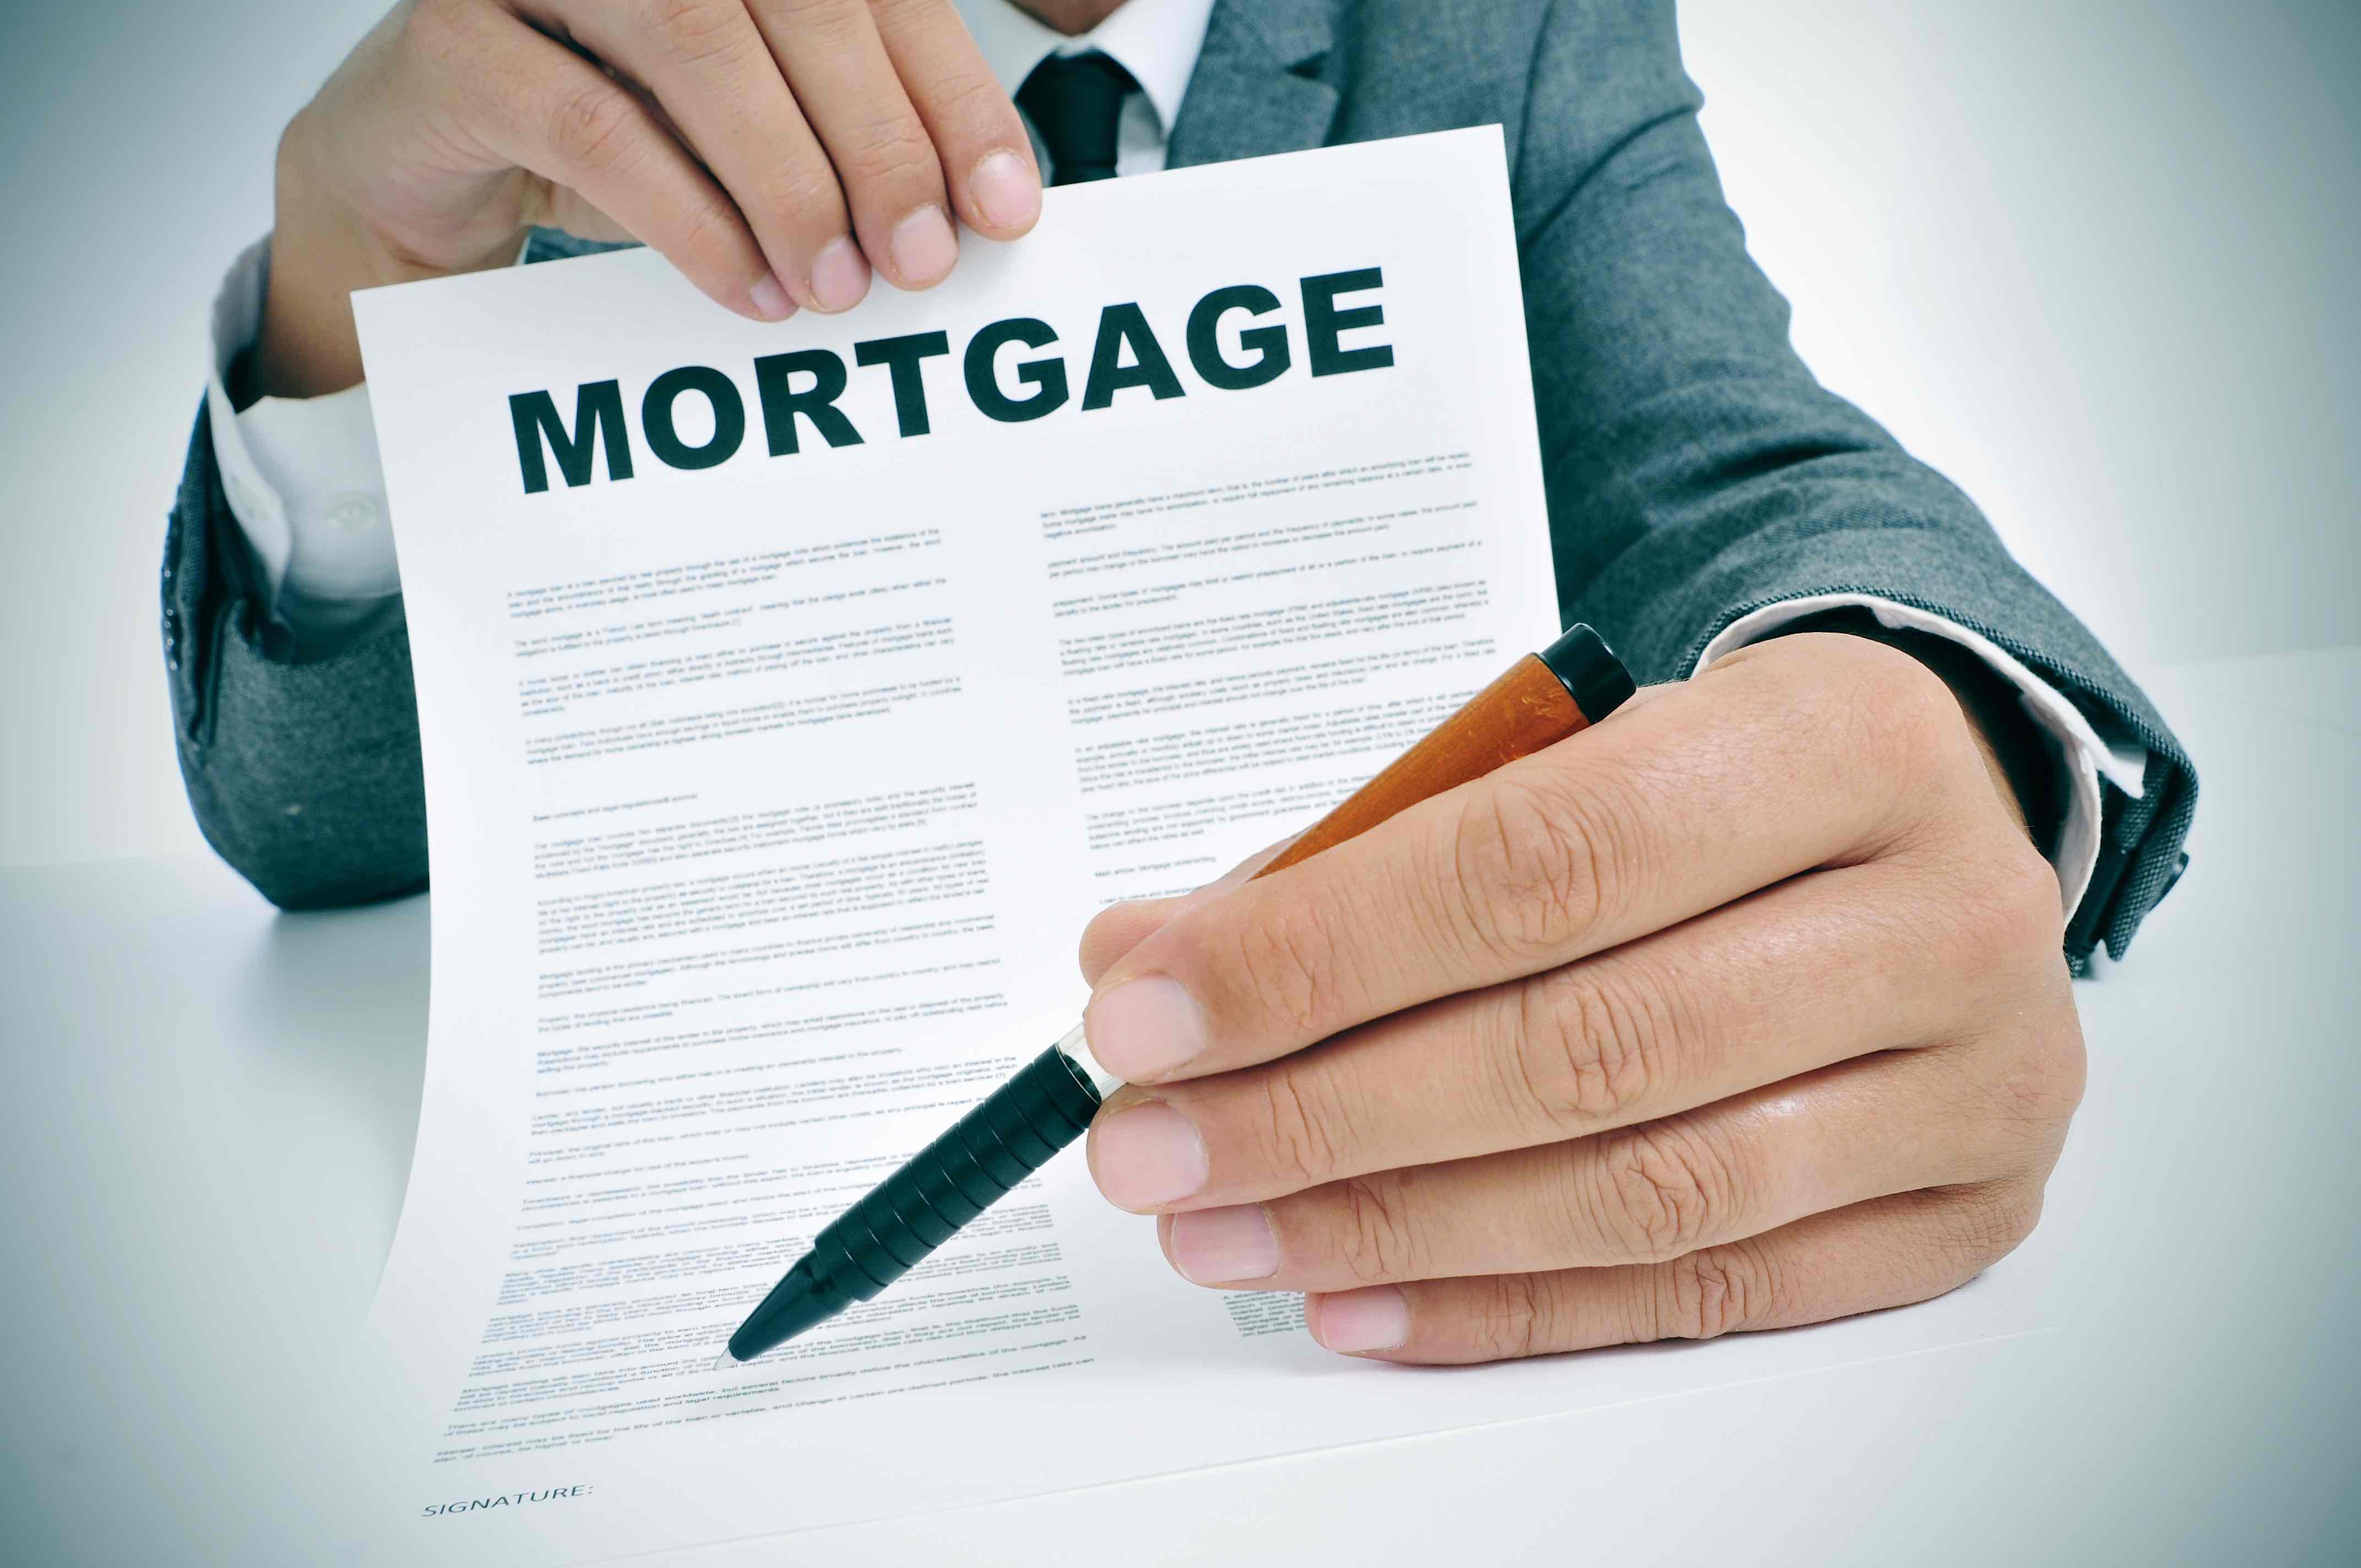 Mortgage underwriting